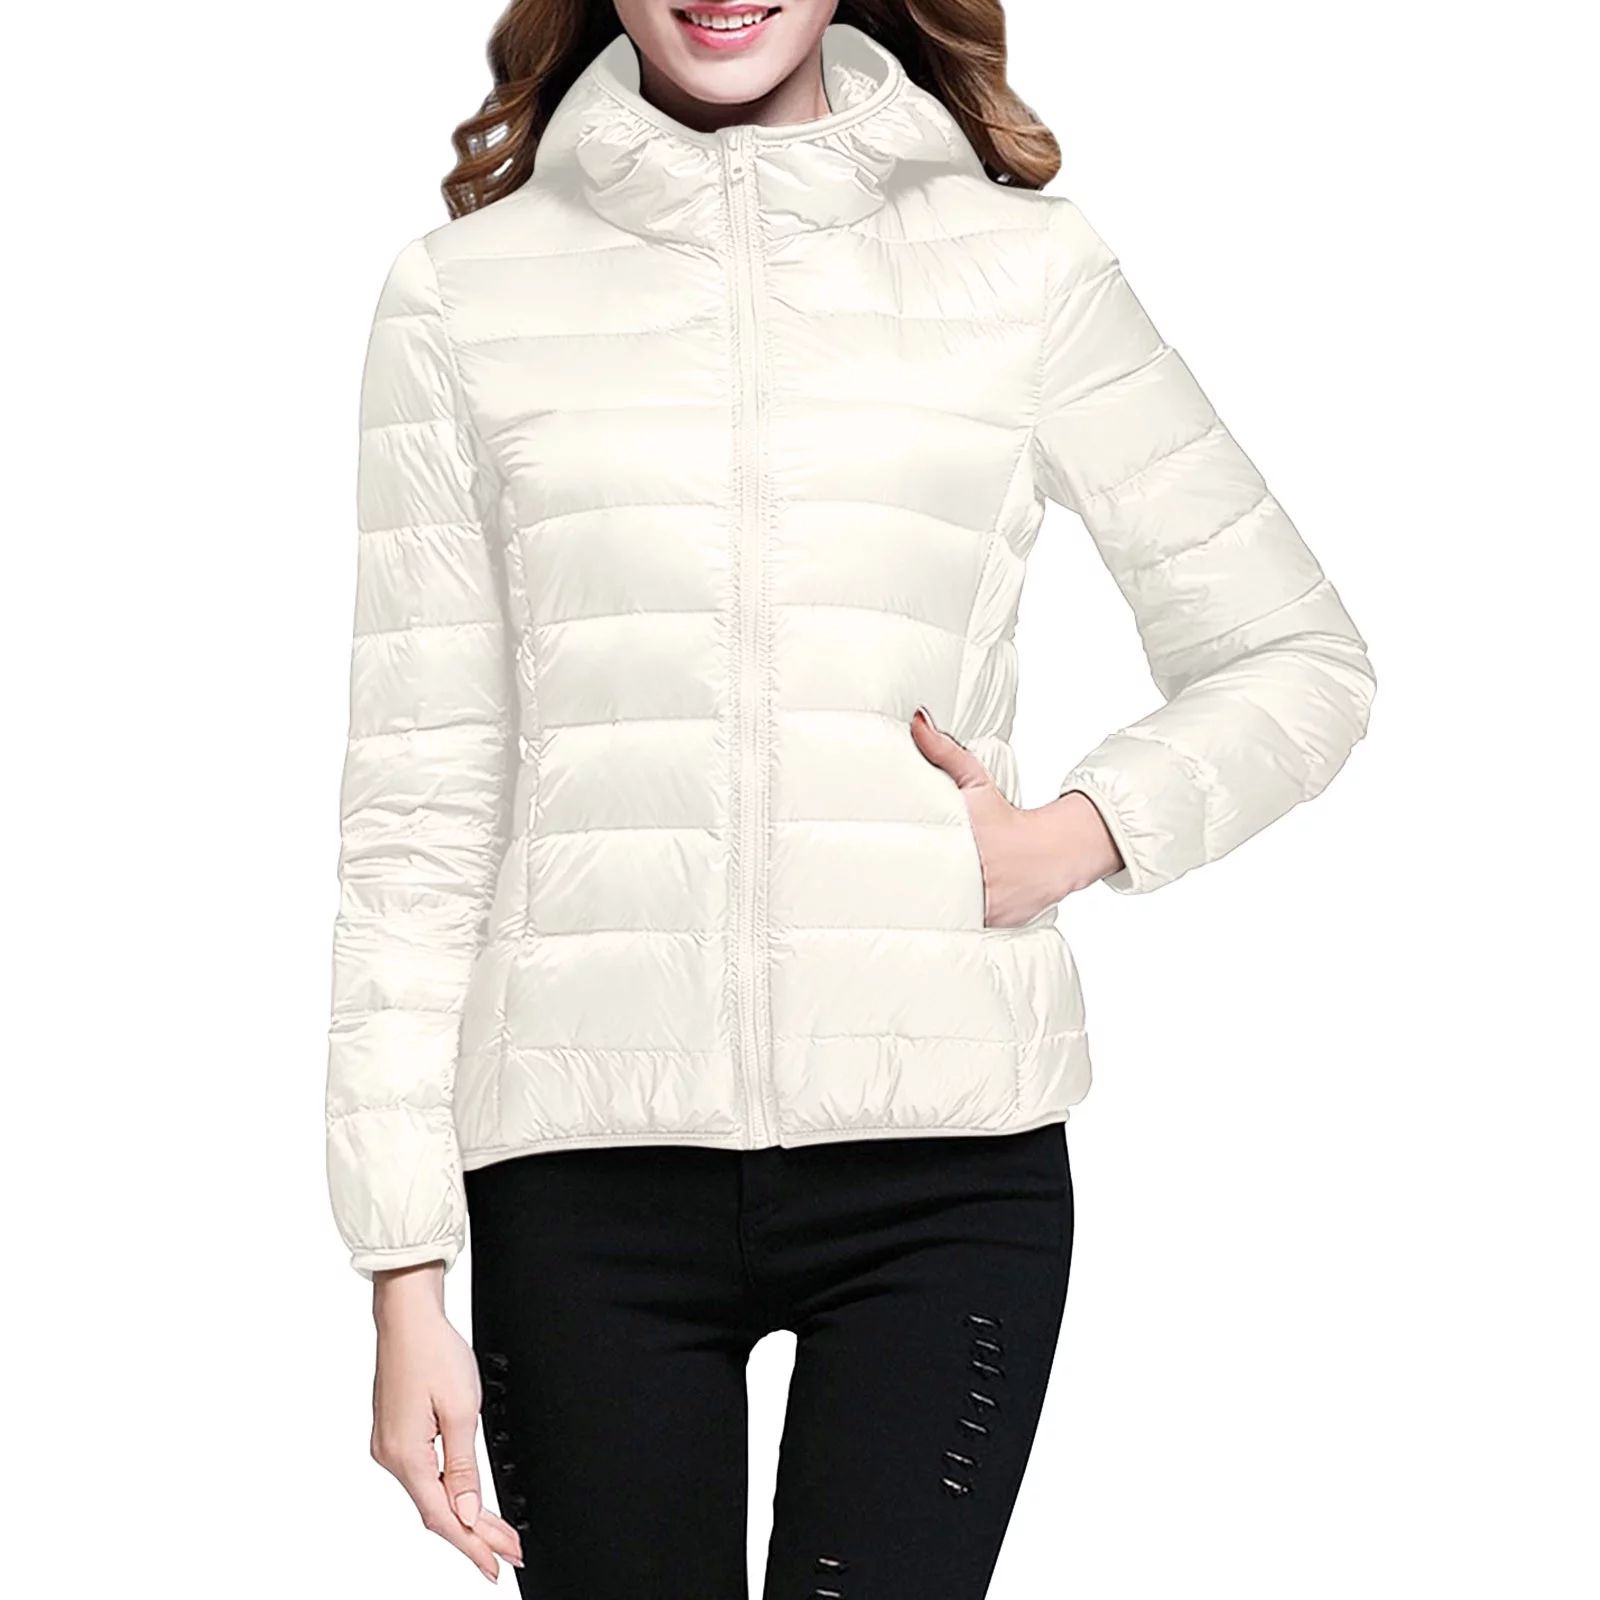 keusn women's packable down jacket lightweight puffer jacket hooded winter coat white l | Walmart (US)